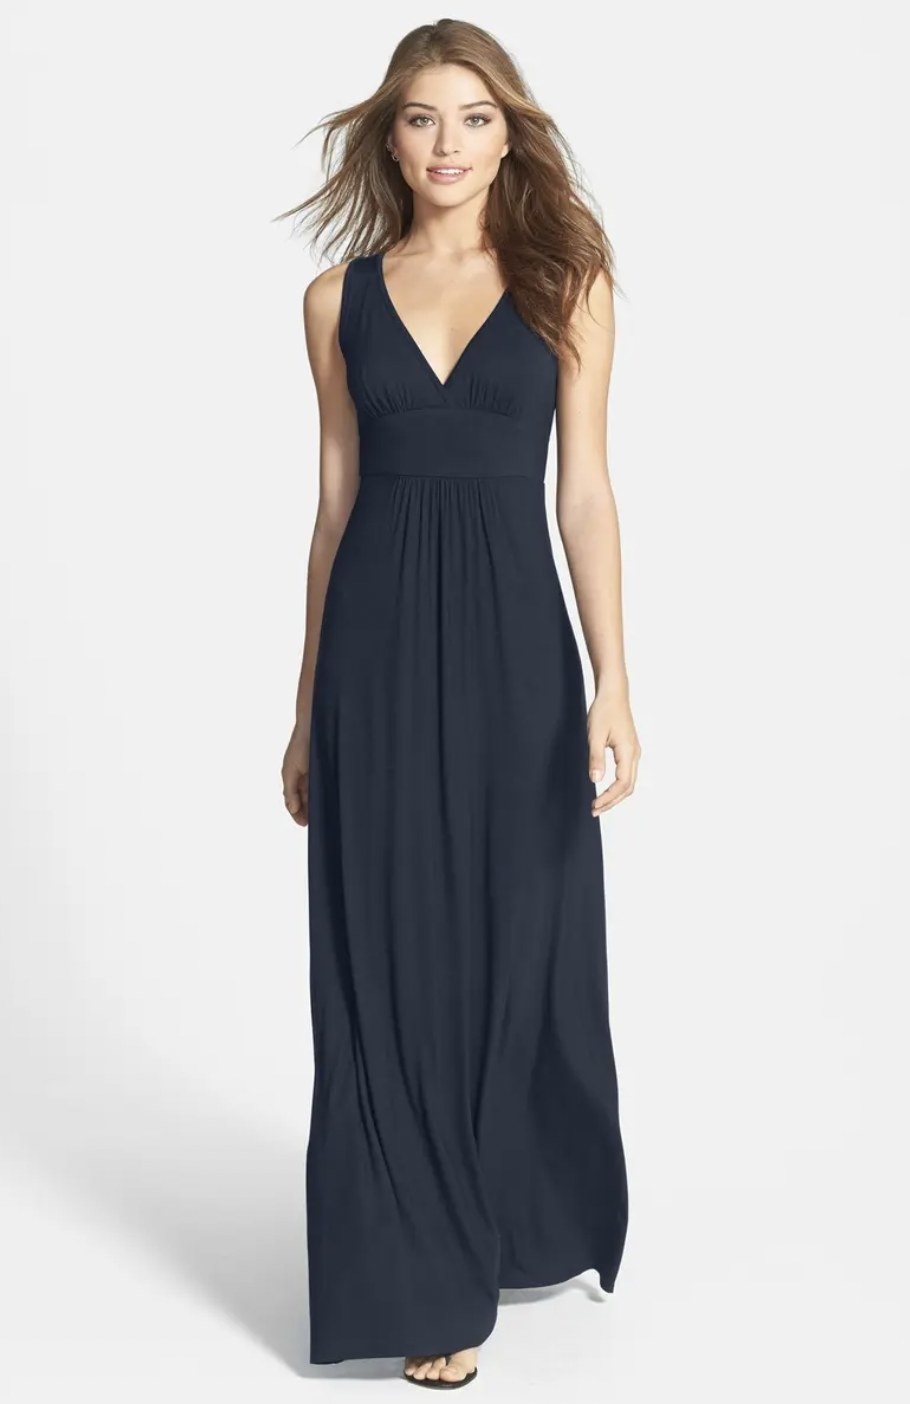 Model in the navy blue dress